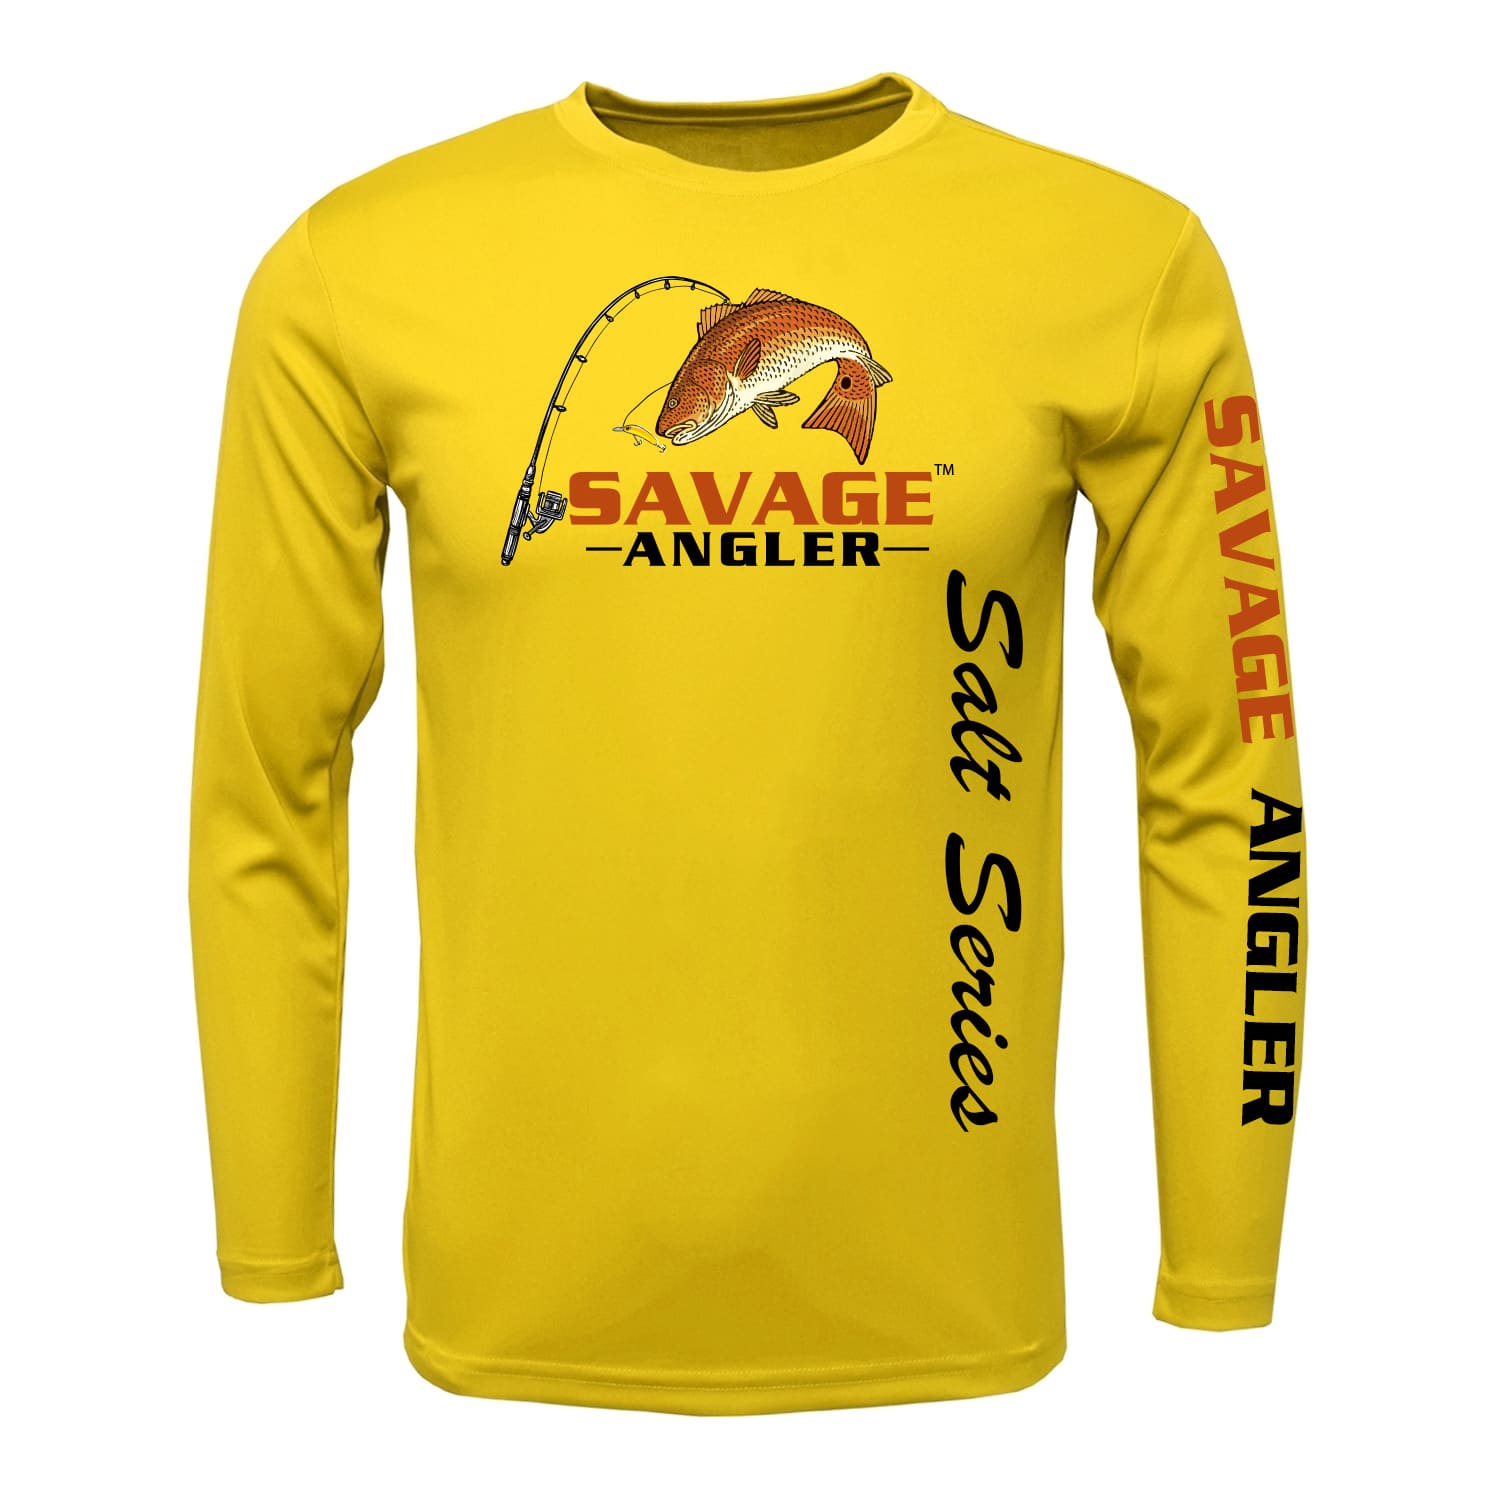 https://savageangler.com/wp-content/uploads/2021/02/Savage-Angler-Salt-Series-Fishing-Shirt_Gold.jpg